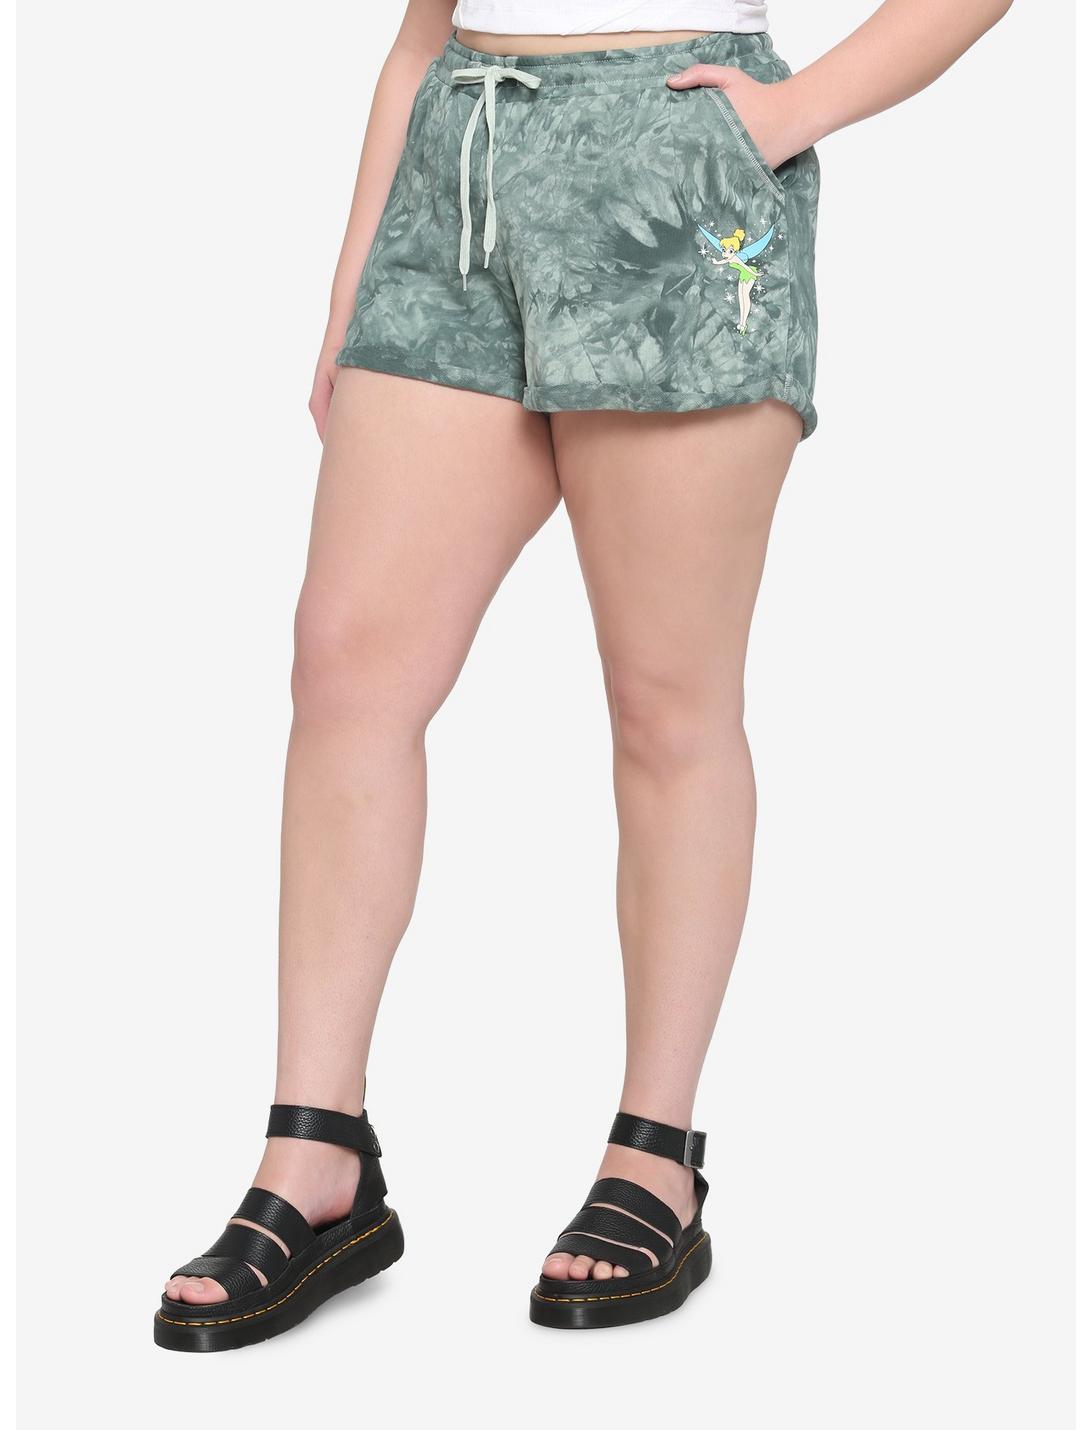 Her Universe Disney Tinker Bell Green Tie-Dye Soft Shorts Plus Size, SAGE, hi-res